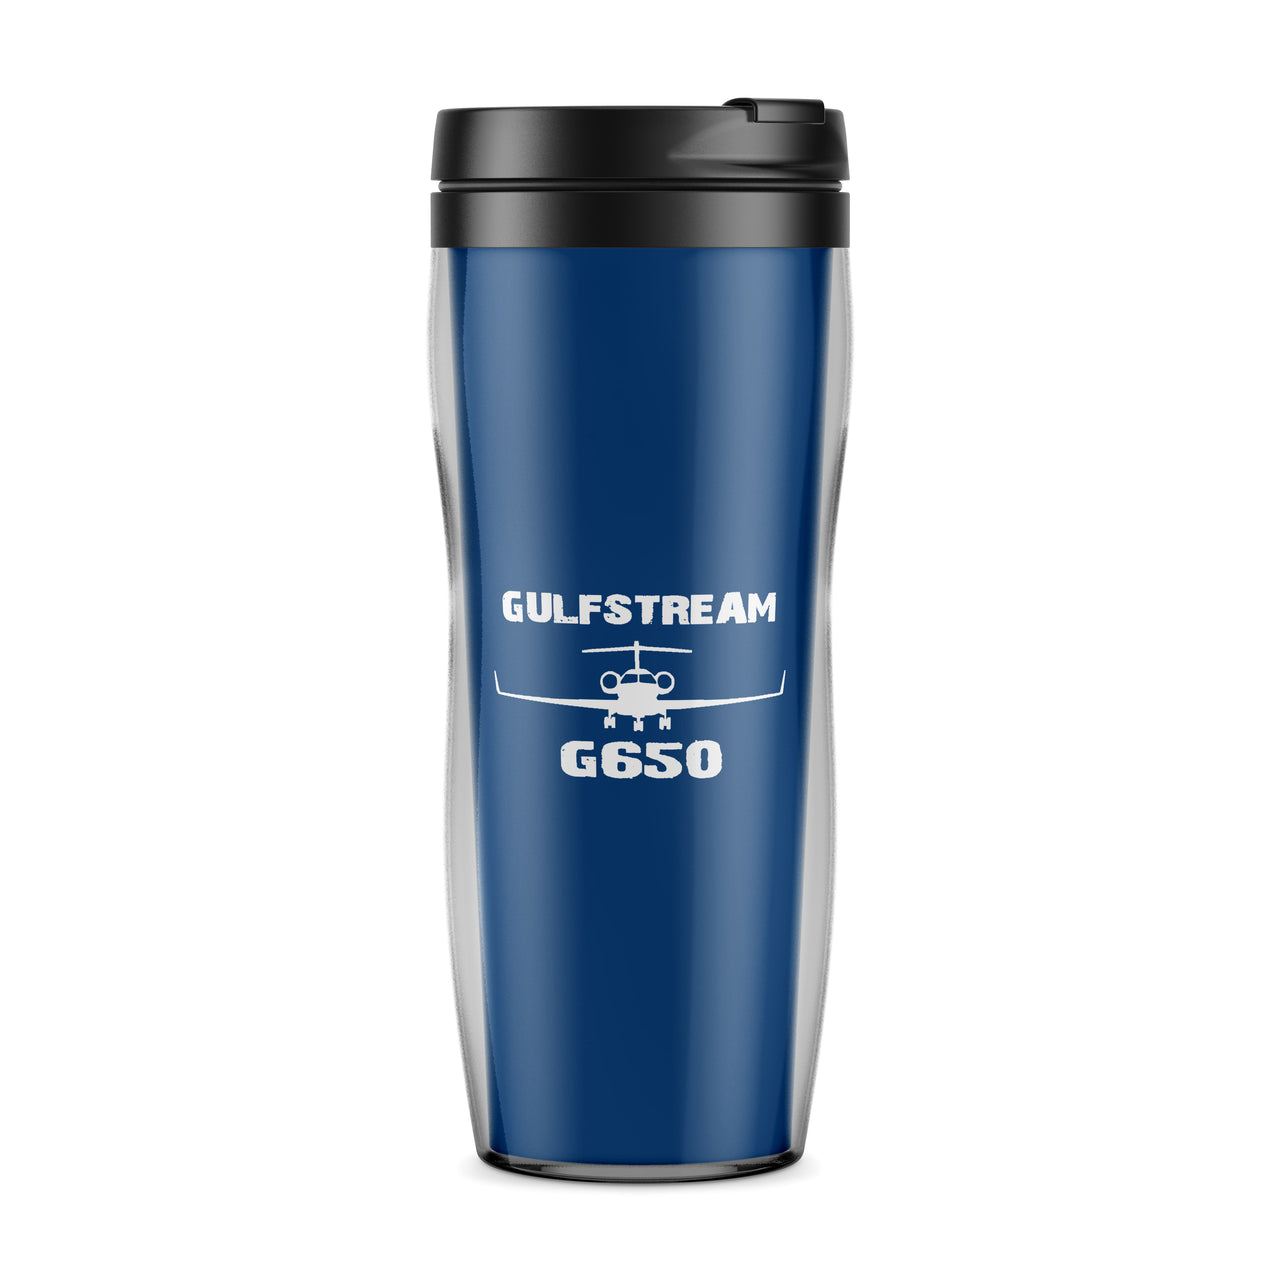 Gulfstream G650 & Plane Designed Travel Mugs